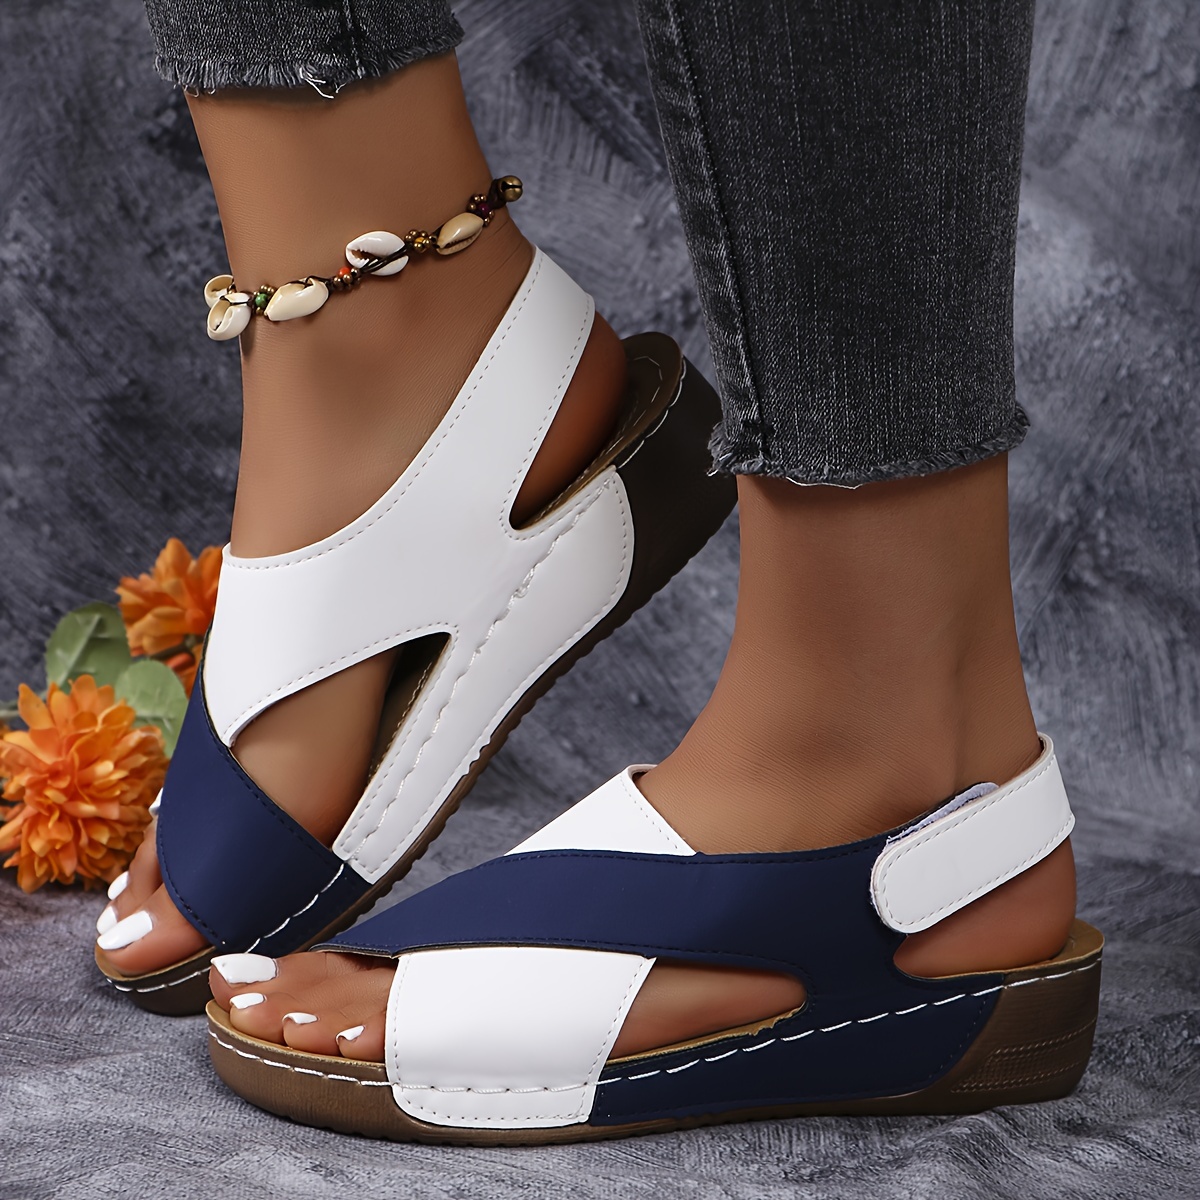 

Women's Colorblock Casual Sandals, Crisscross Bands Platform Soft Sole Shoes, Slingback Wedge Comfort Shoes